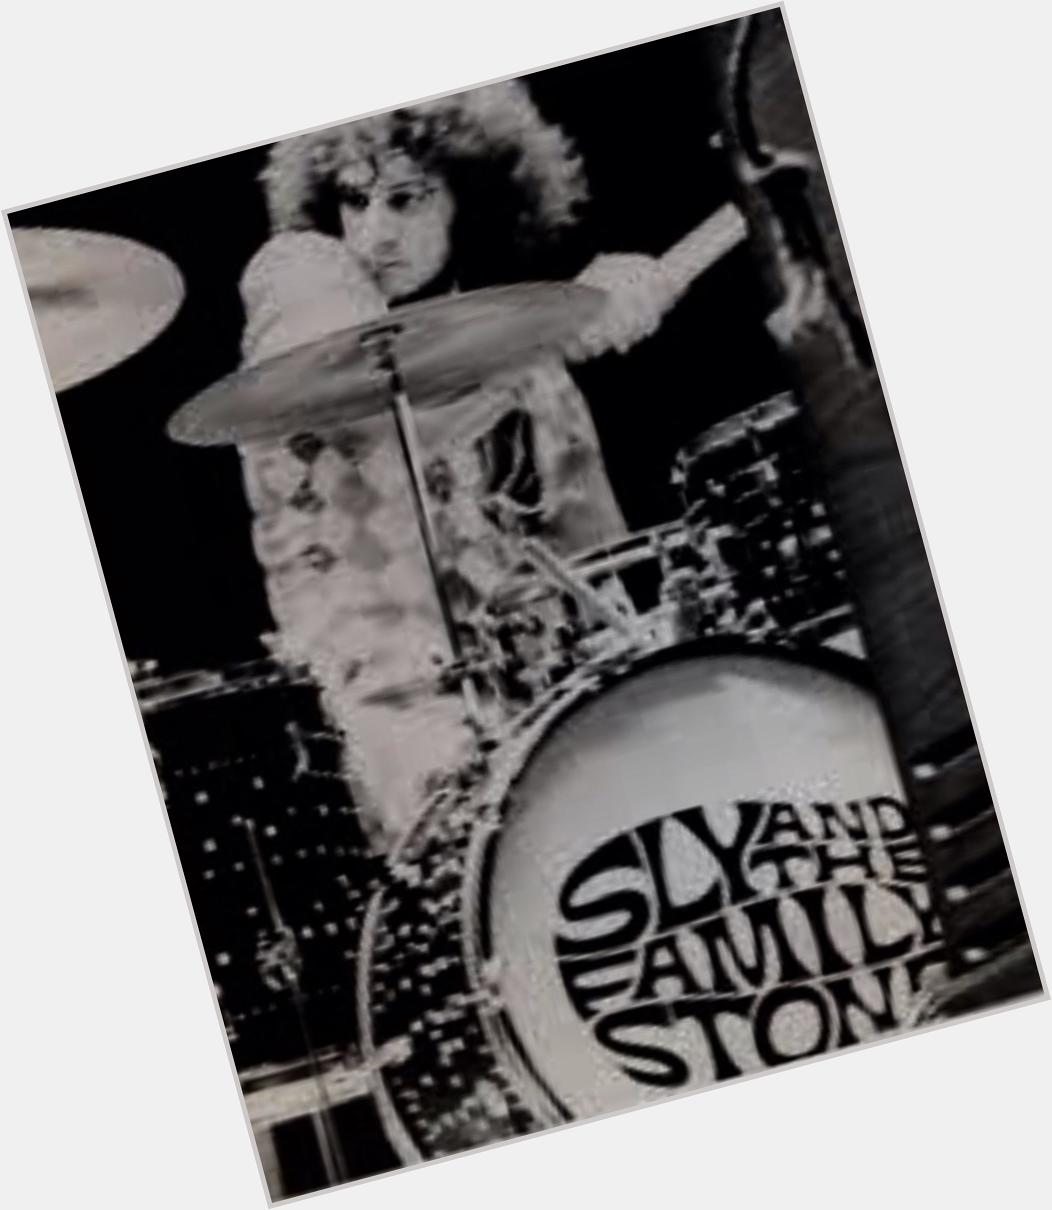 09/01/1946  Happy Birthday, Greg Errico,
drummer of Sly & The Family Stone 